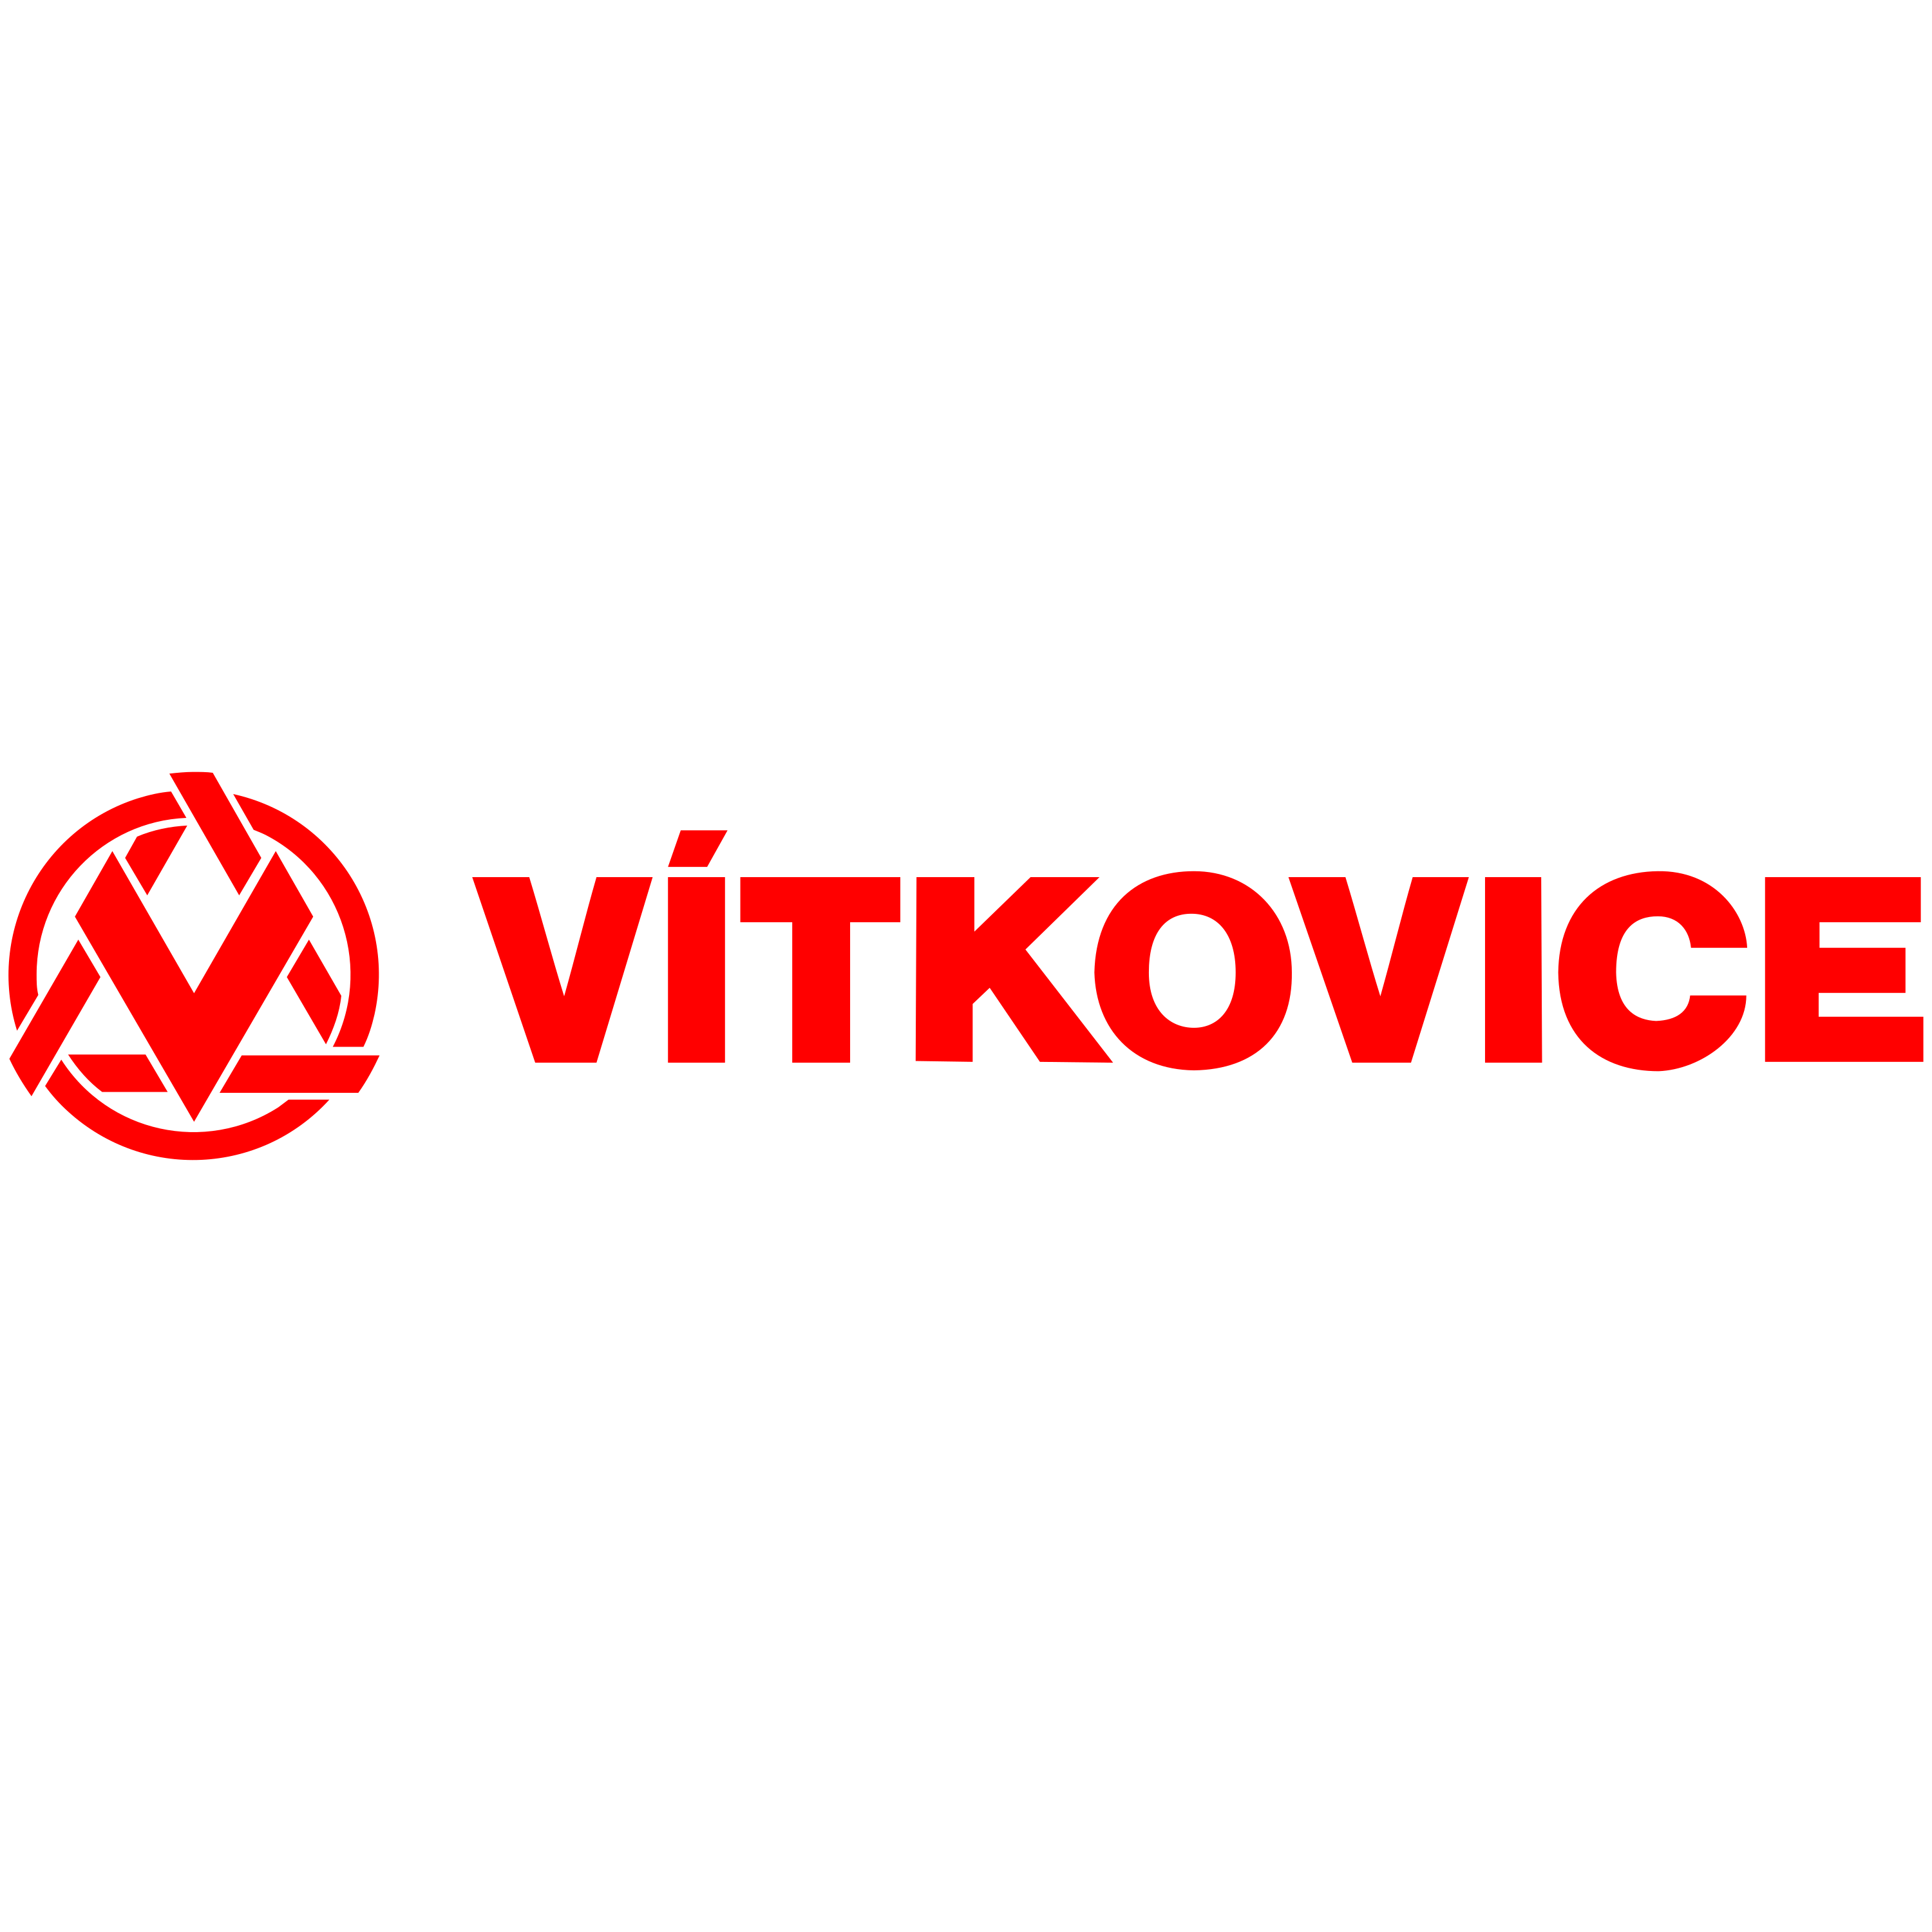 Vitkovice Logo  Transparent Photo